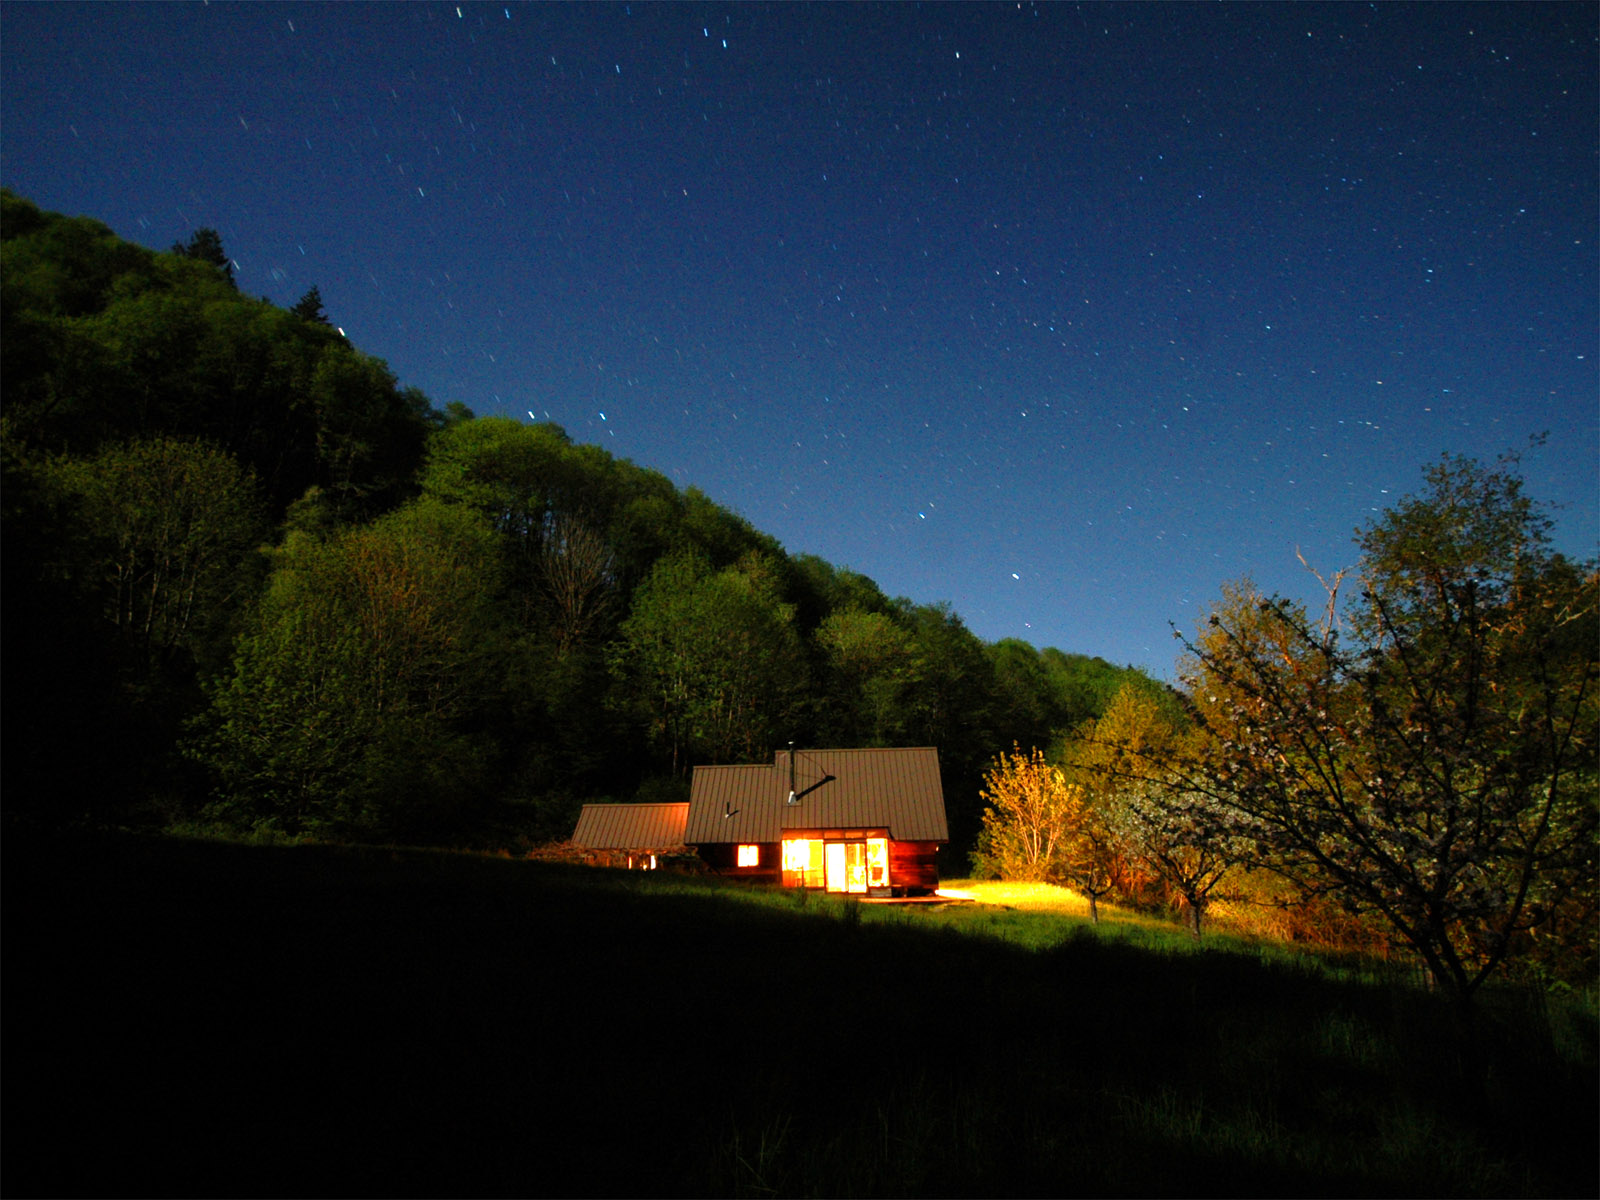 Moonlight cabin on a starry night